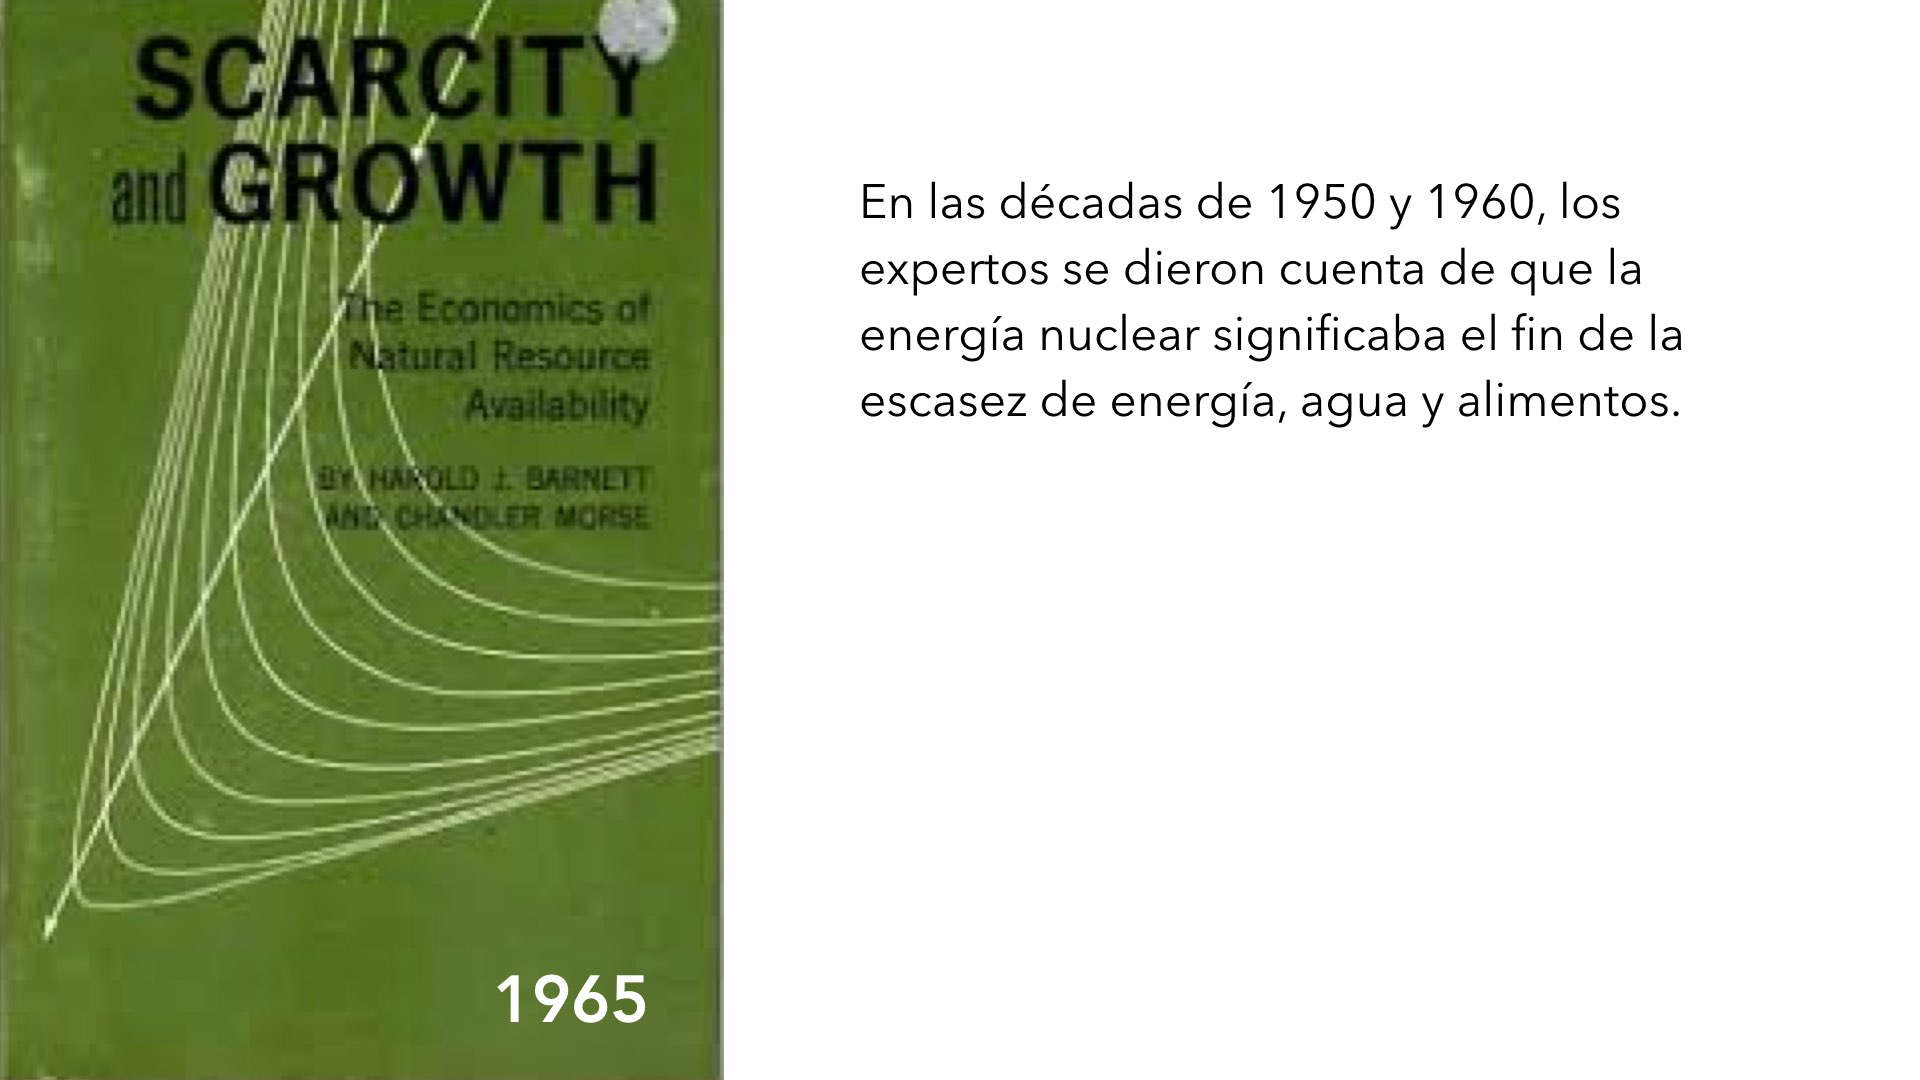 Why Spain Needs Nuclear web site.039.jpeg